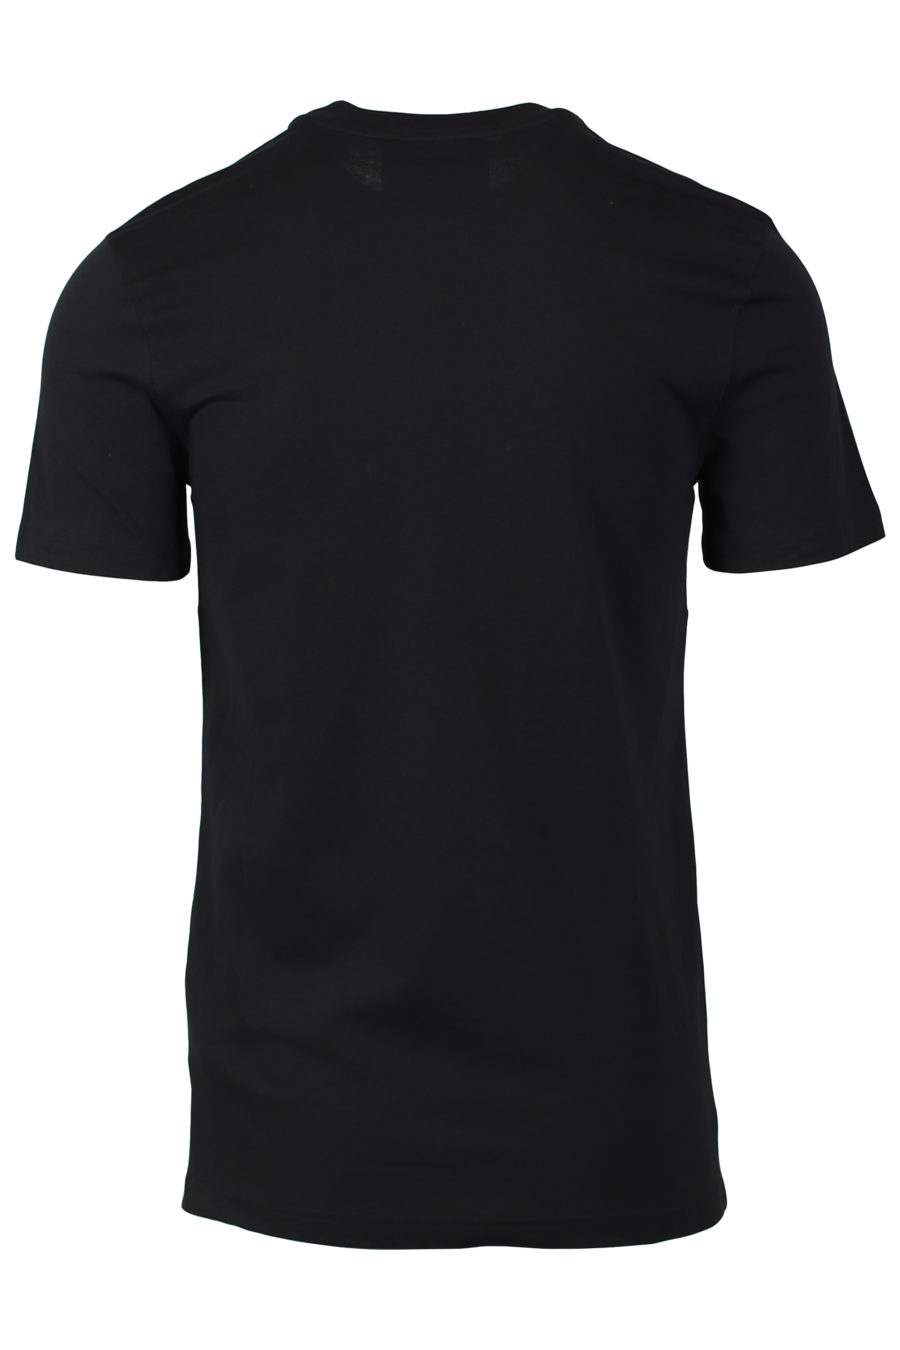 T-shirt black logo black and white - IMG 0946